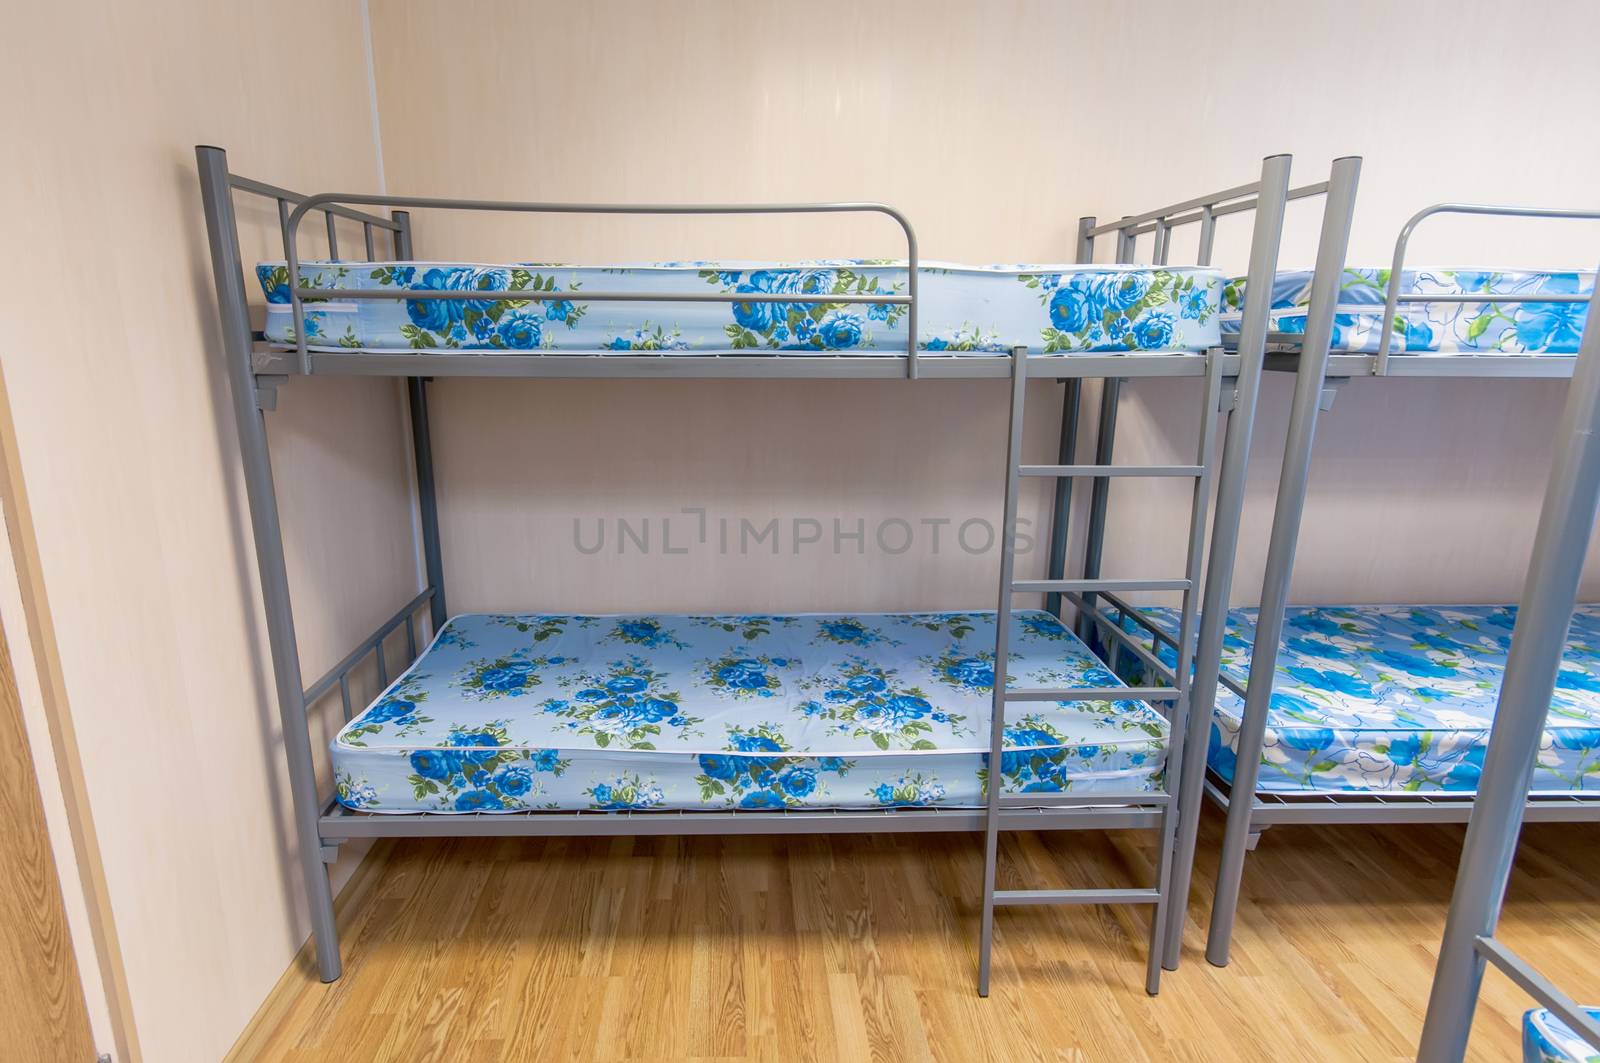 bunk metal beds in hostel room by vlaru